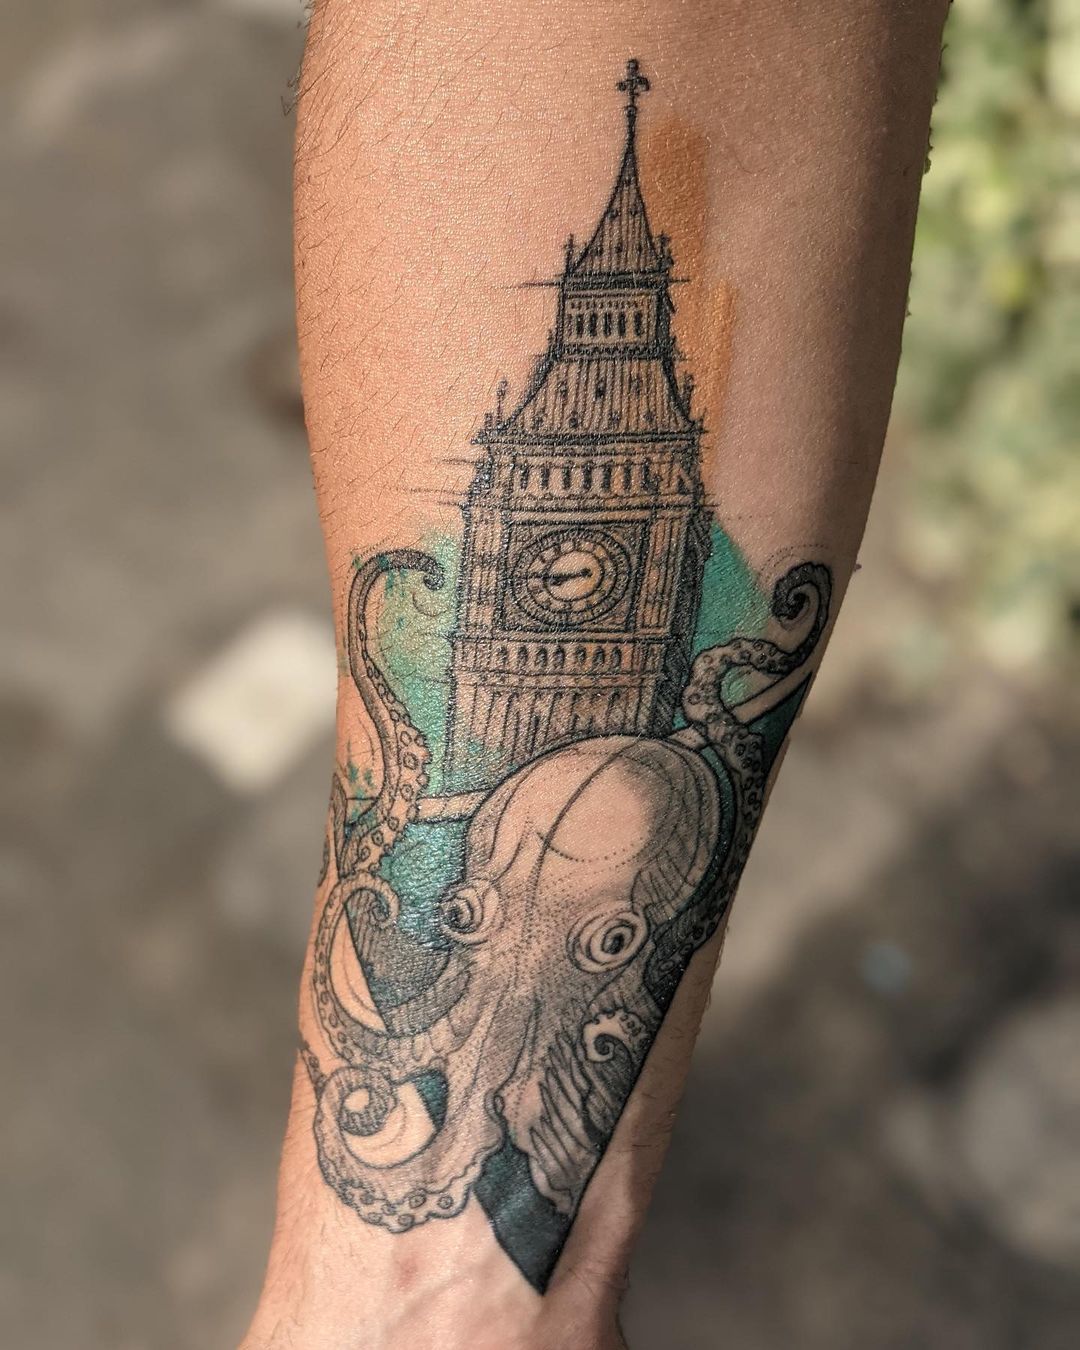 Philip Yarnell on Tumblr: Image tagged with tower bridge, london, tattoo